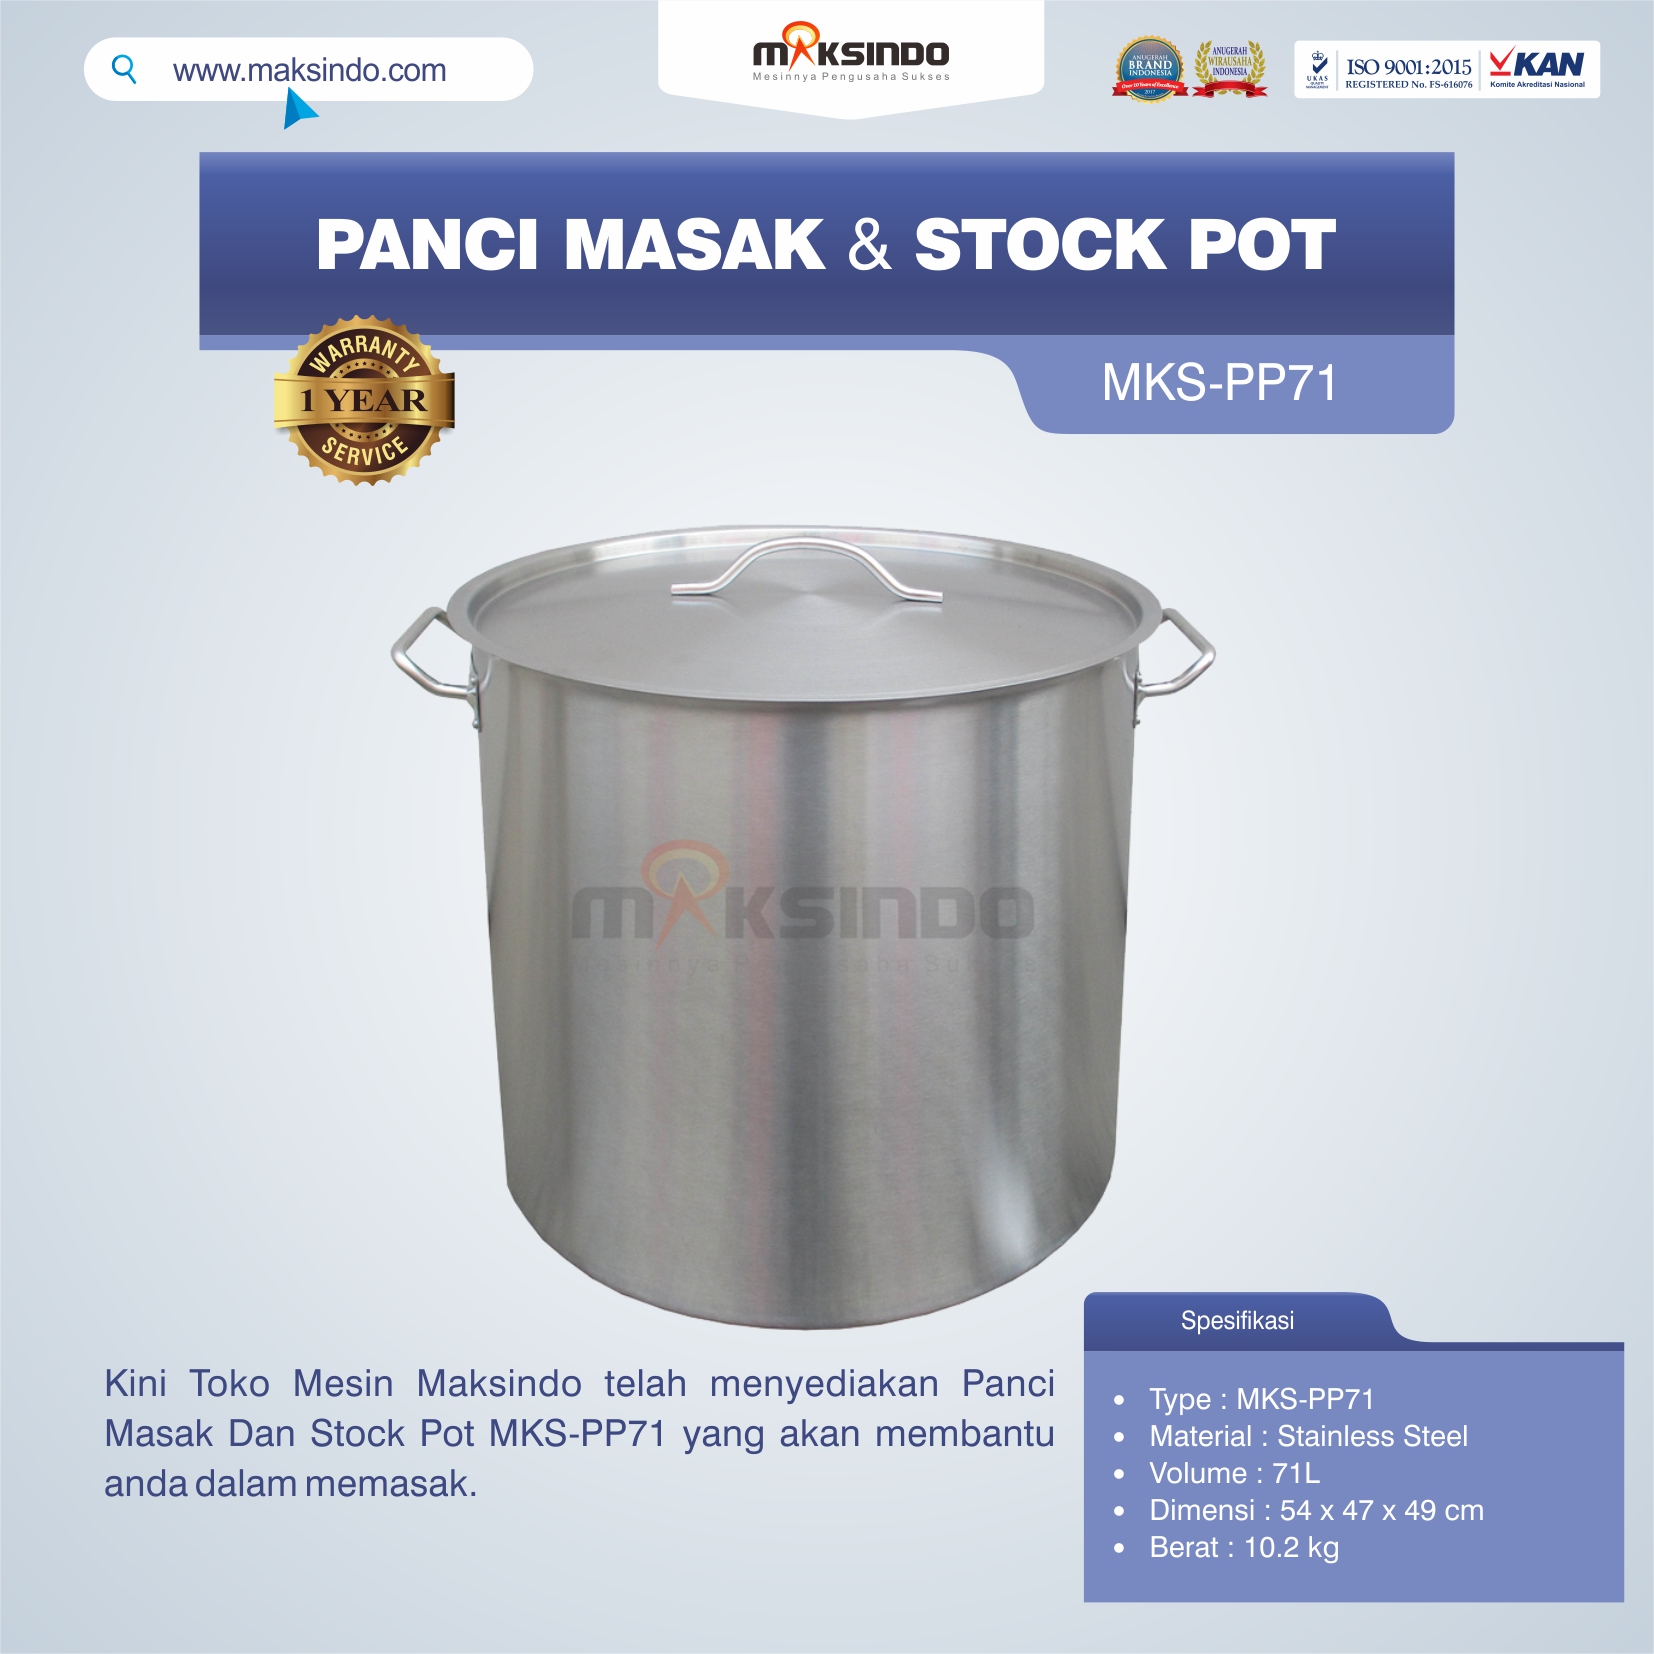 Jual Panci Masak Dan Stock Pot MKS-PP71 di Bandung